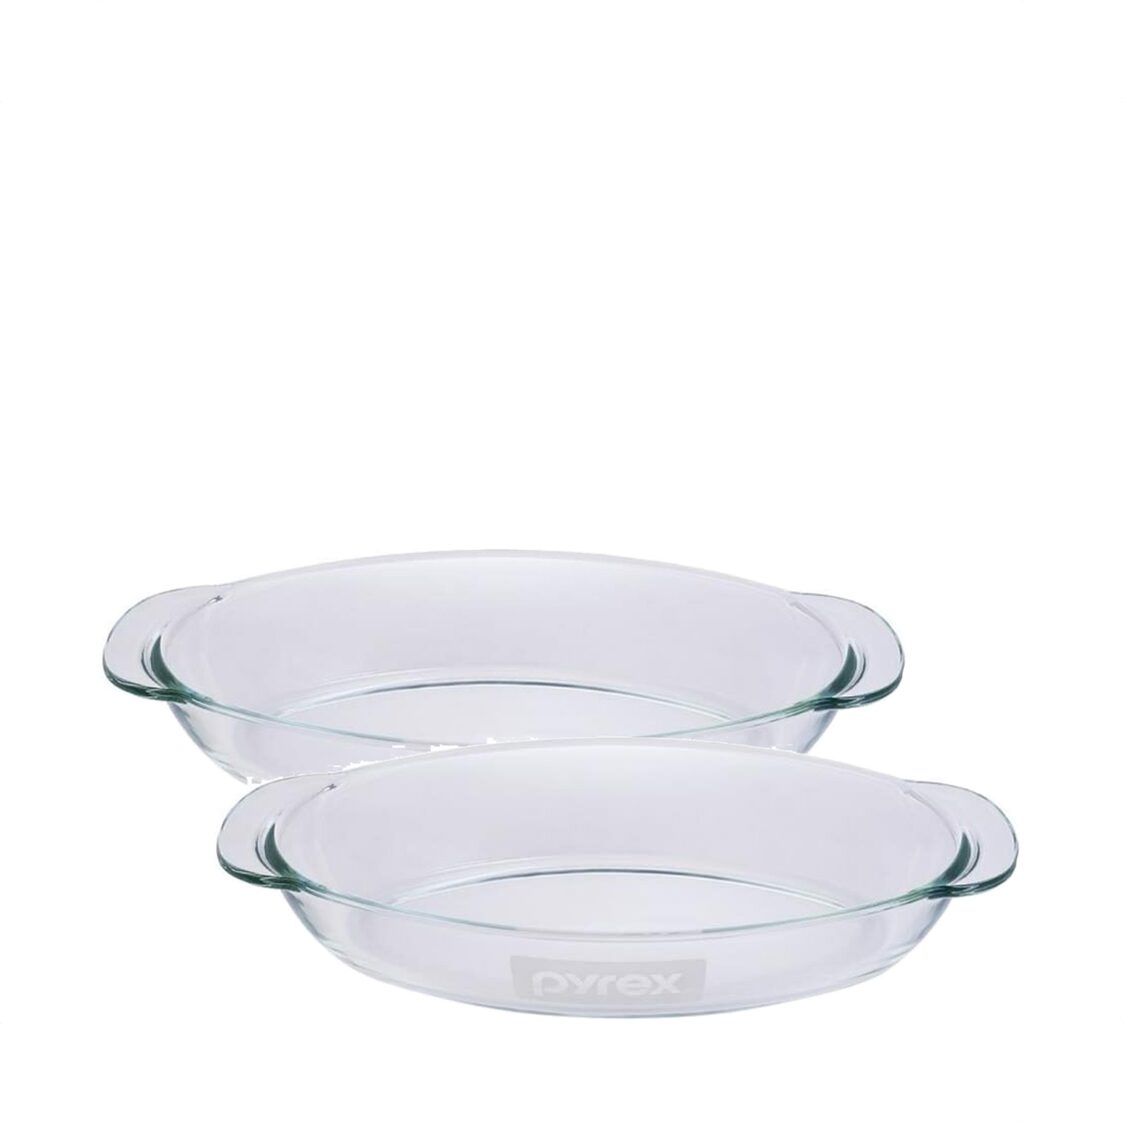 Pyrex Oval Dish 17L 2pcs